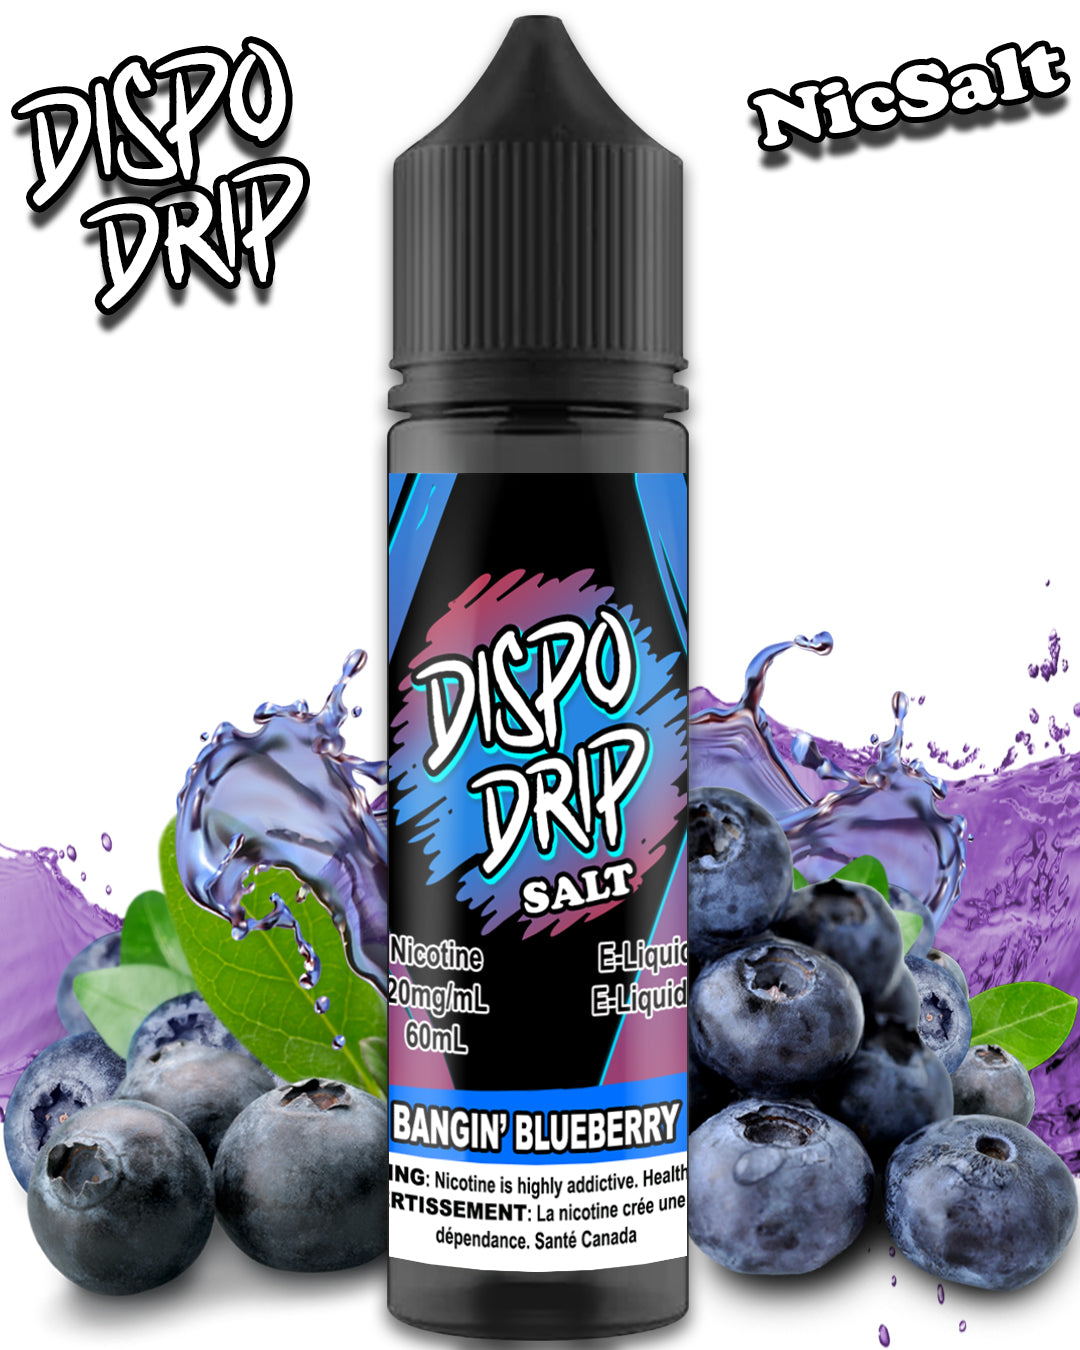 DISPO DRIP - BANGIN BLUEBERRY SALT